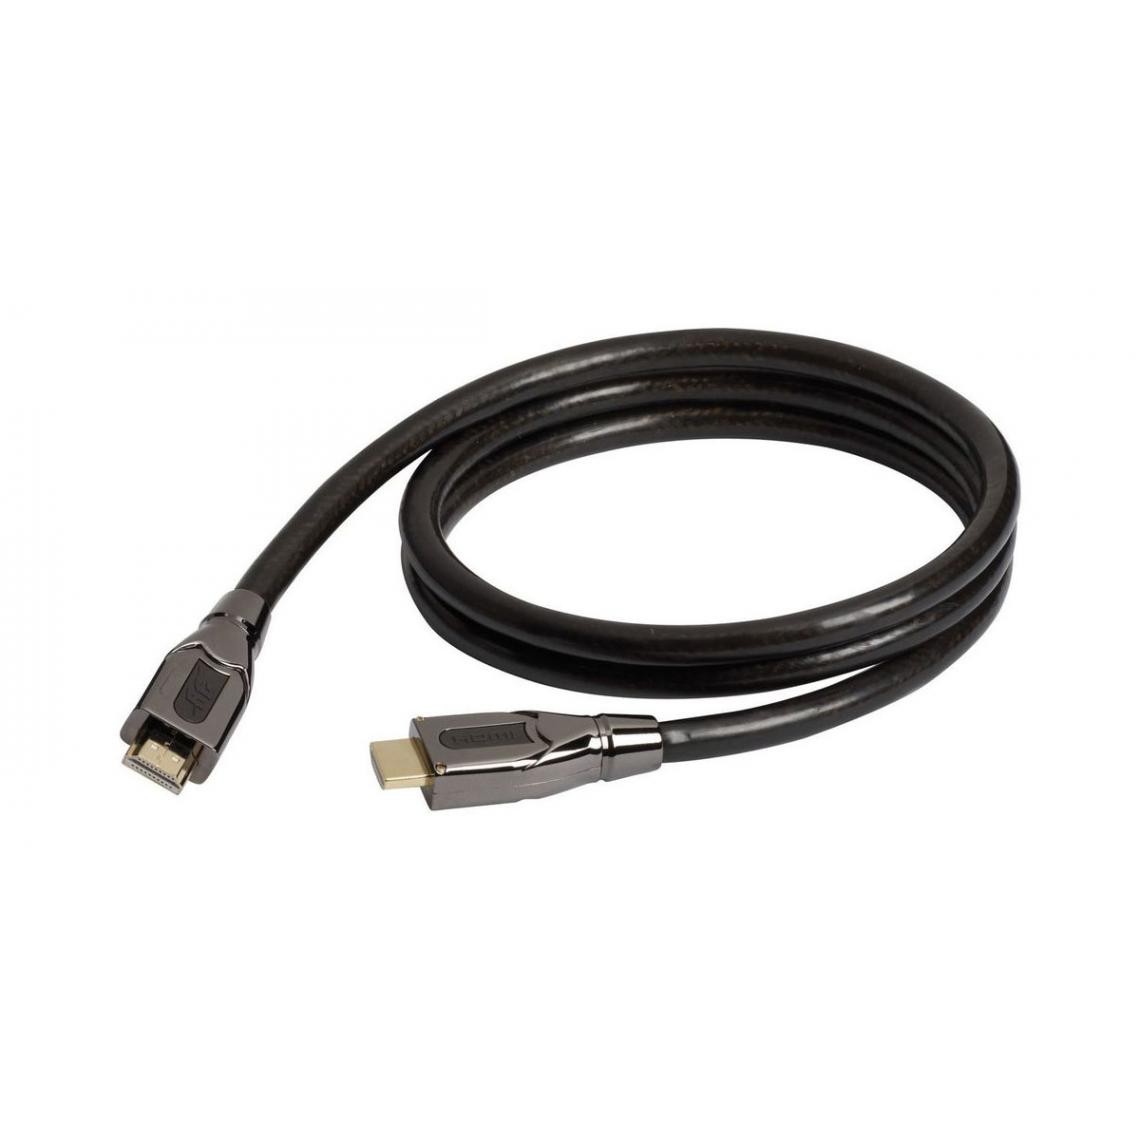 Real cable - Real Cable HD-E-2 - Câble HDMI de 0,75 m - Câble antenne